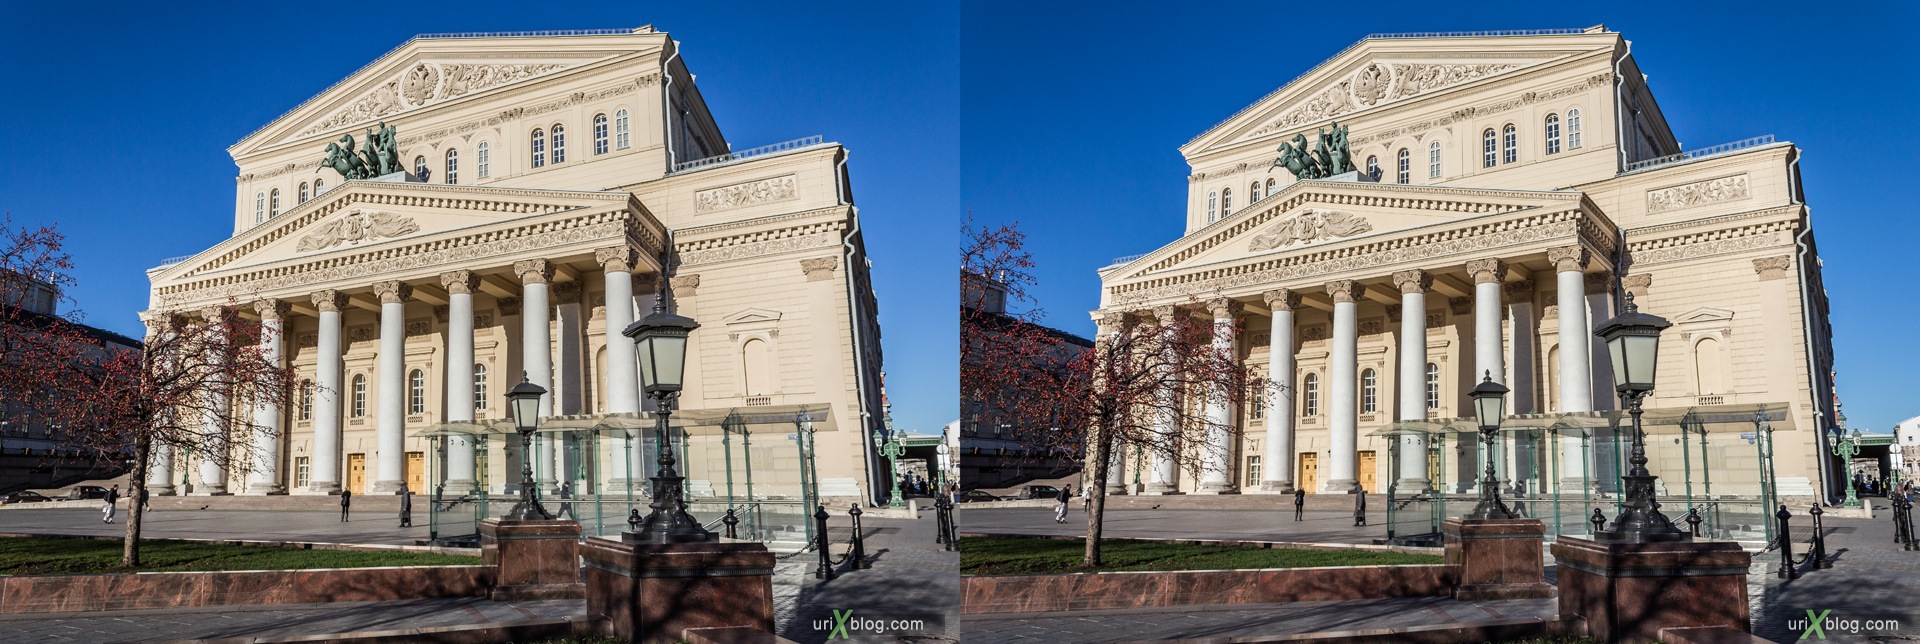 2013, Moscow, Russia, Teatralnaya square, Theatre square, Bolshow theatre, Grand theatre, 3D, stereo pair, cross-eyed, crossview, cross view stereo pair, stereoscopic